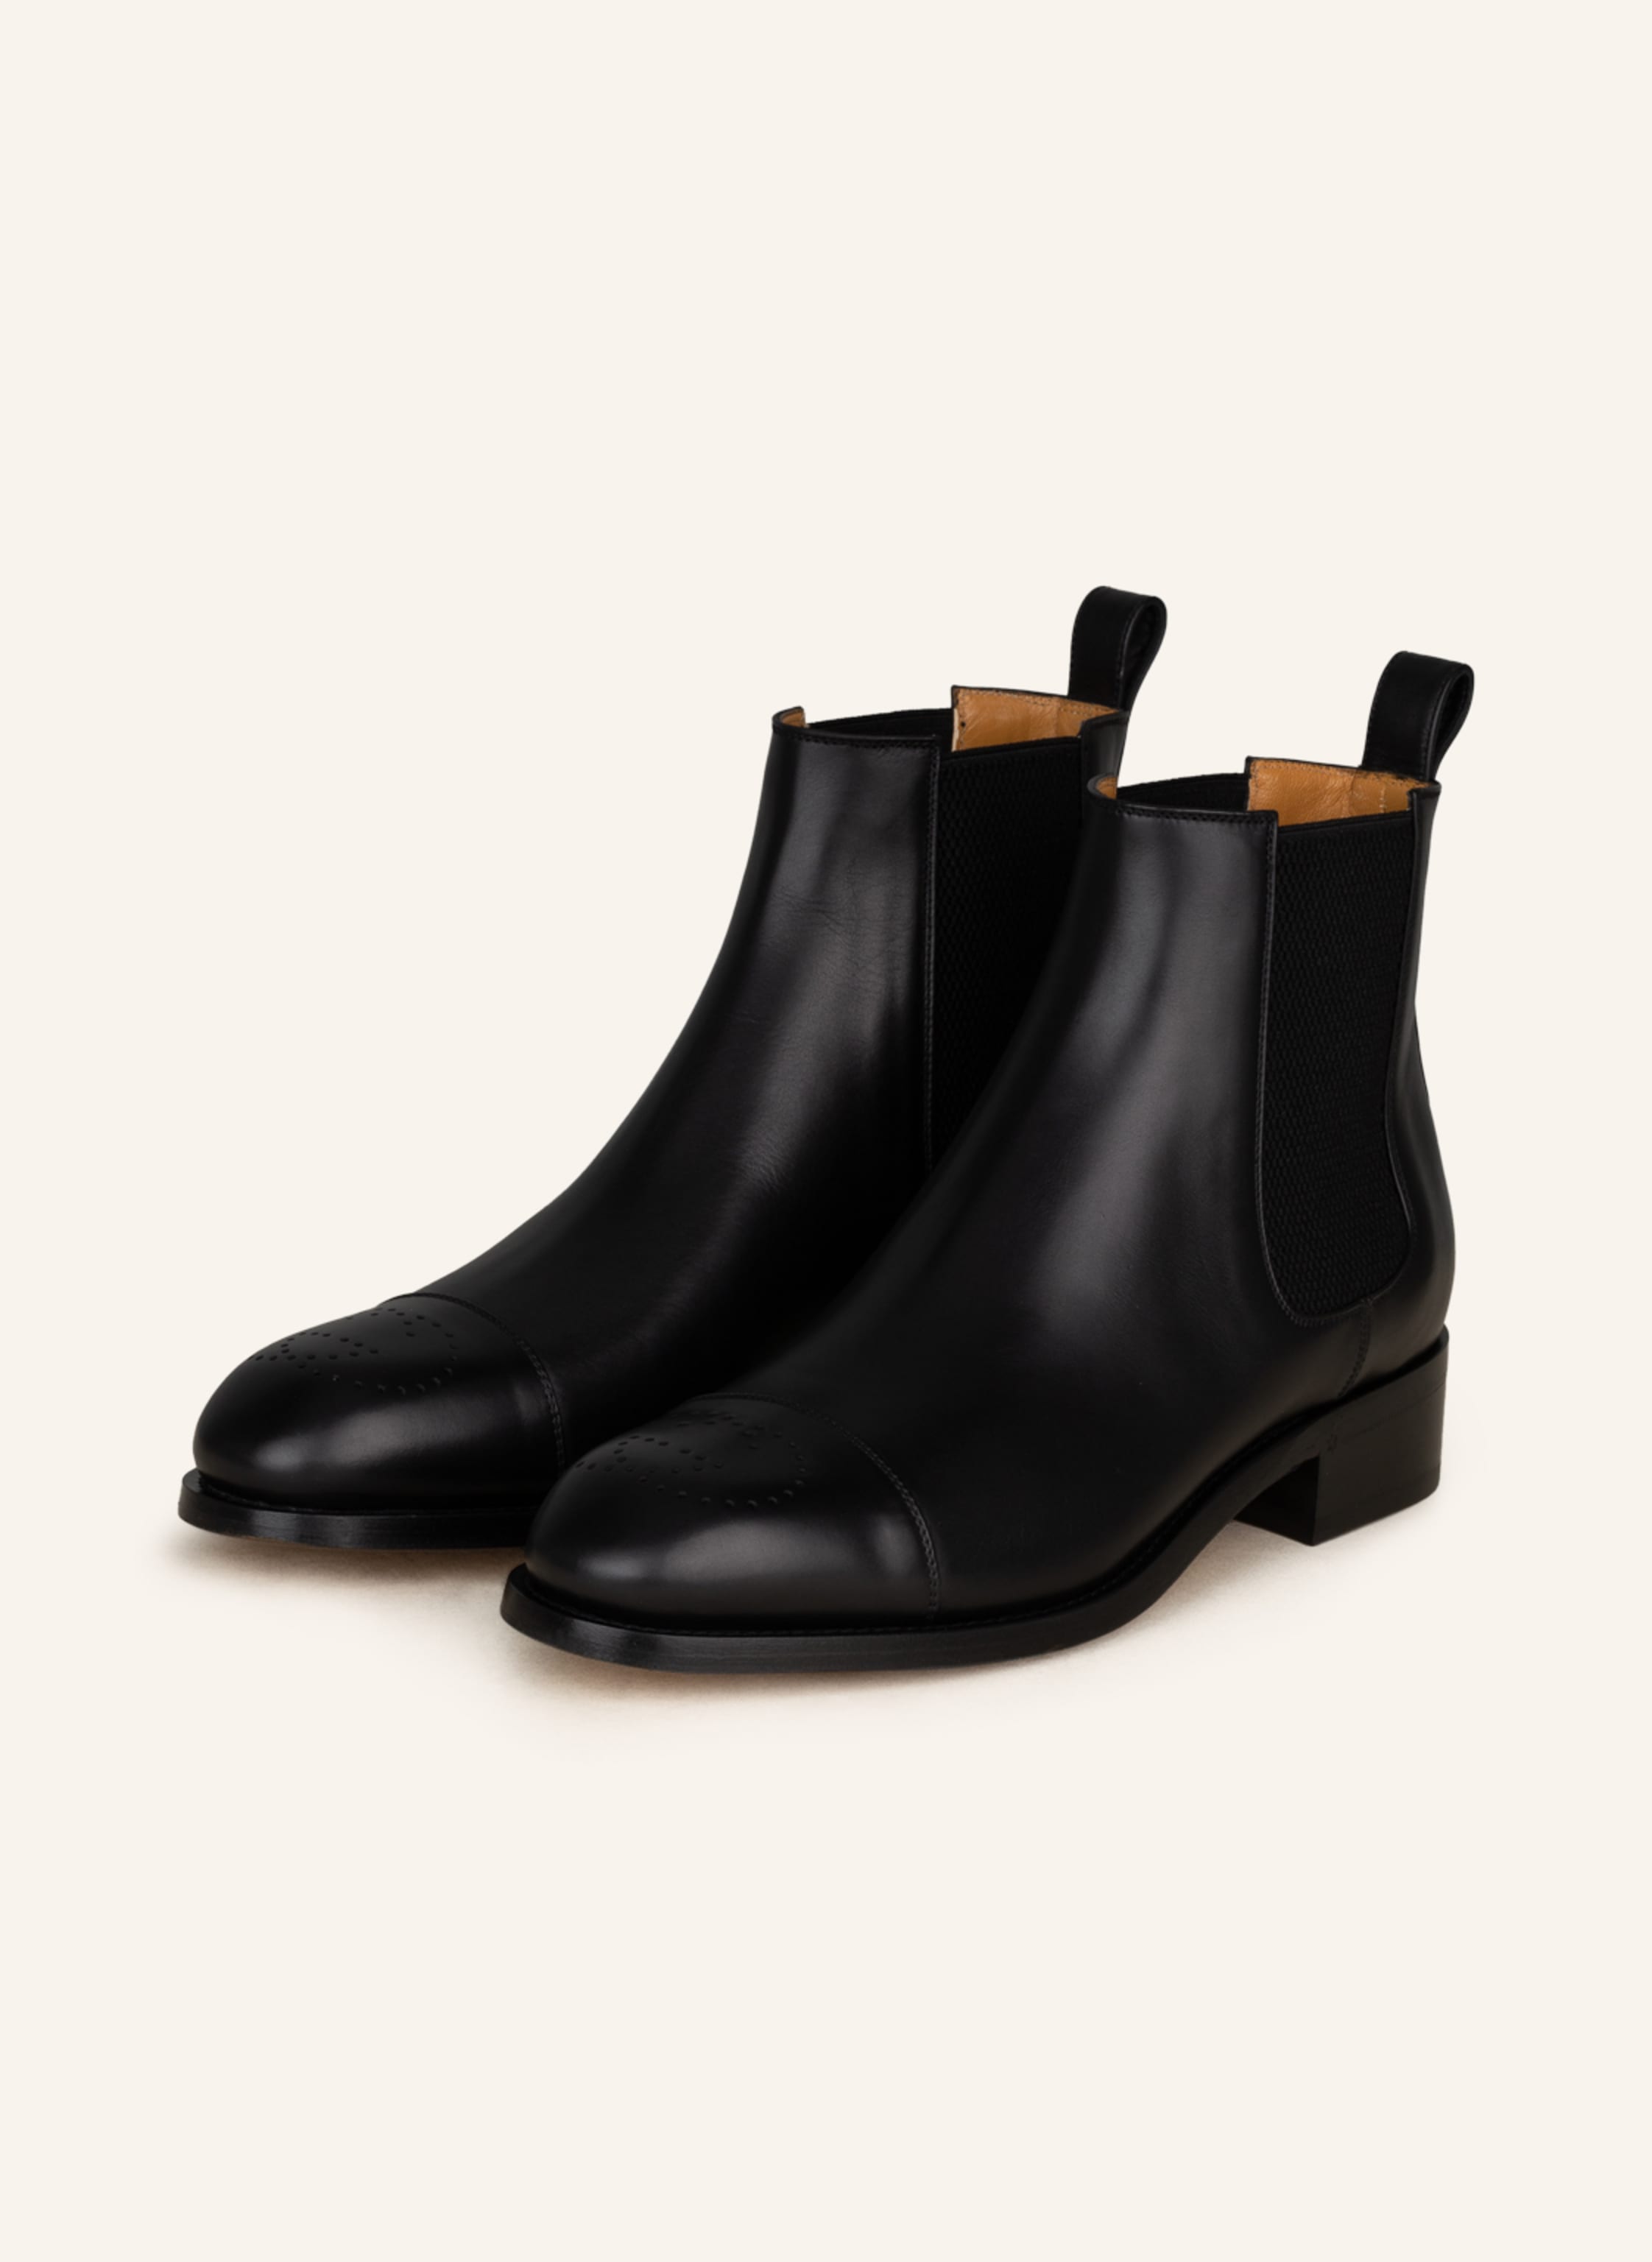 GUCCI boots ZOWIE in 1000 nero/black | Breuninger